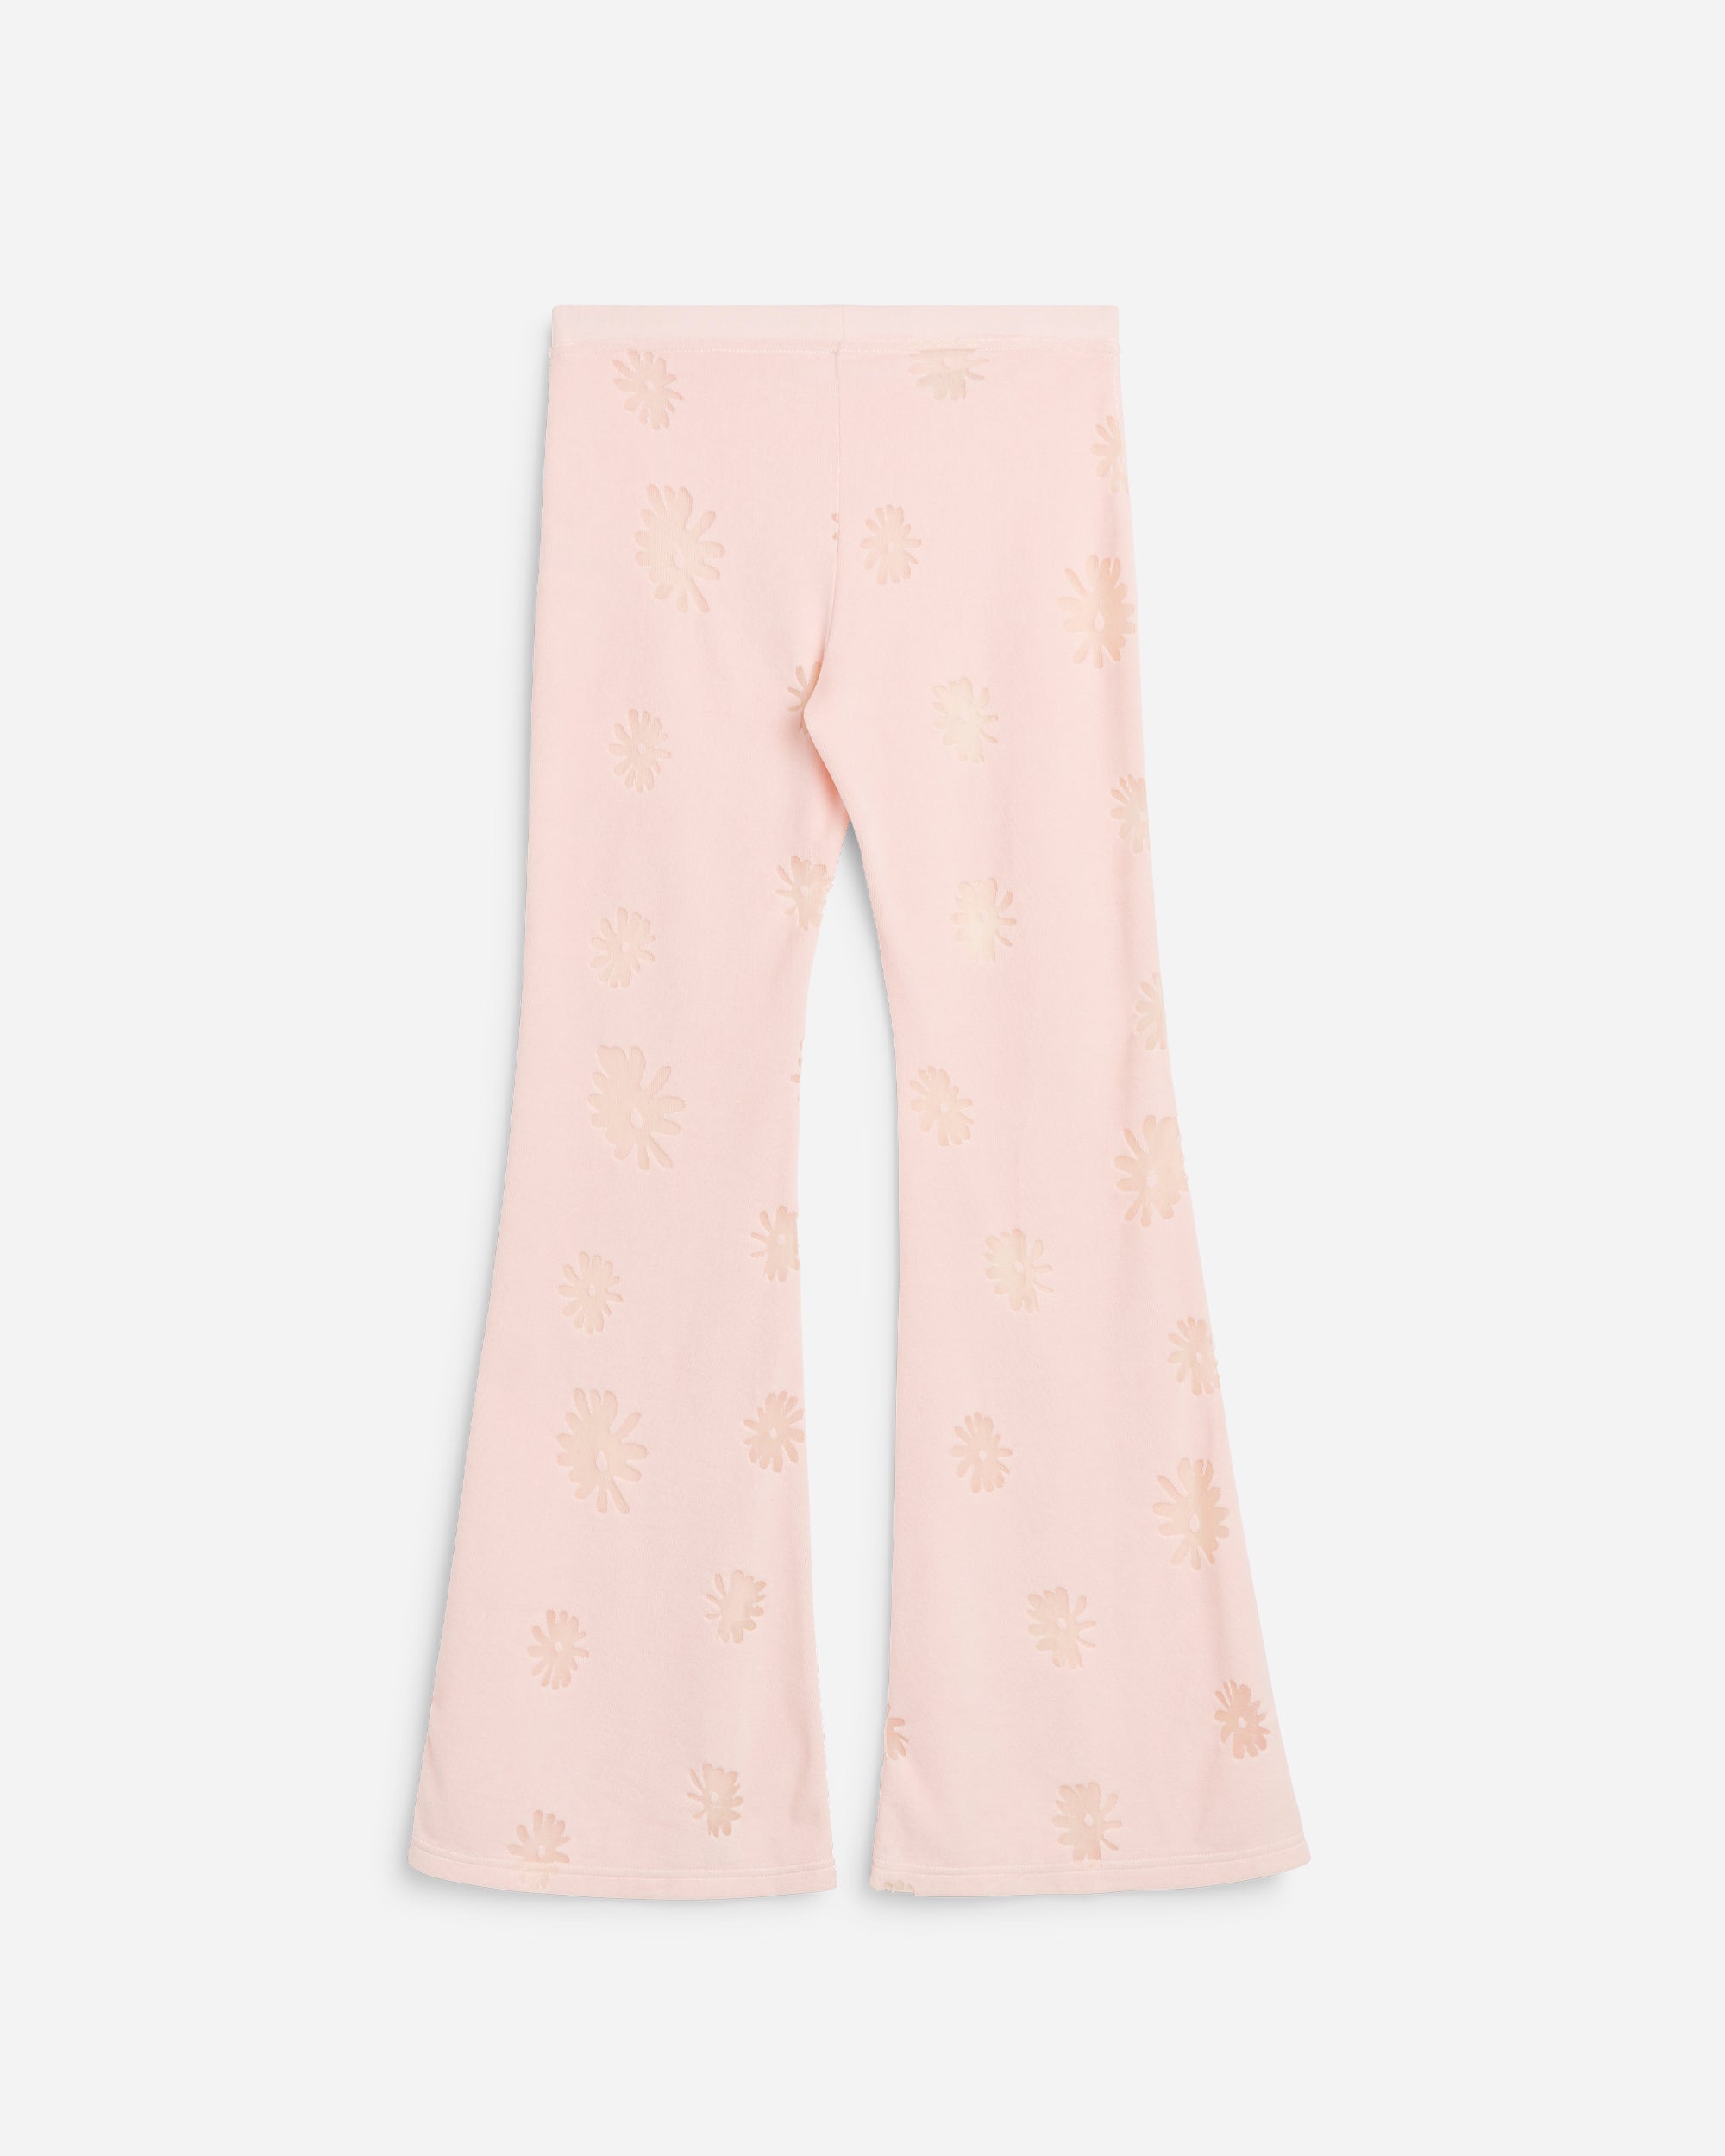 SOULLAND Haven Pants Pink multi 41038-1267-PNK